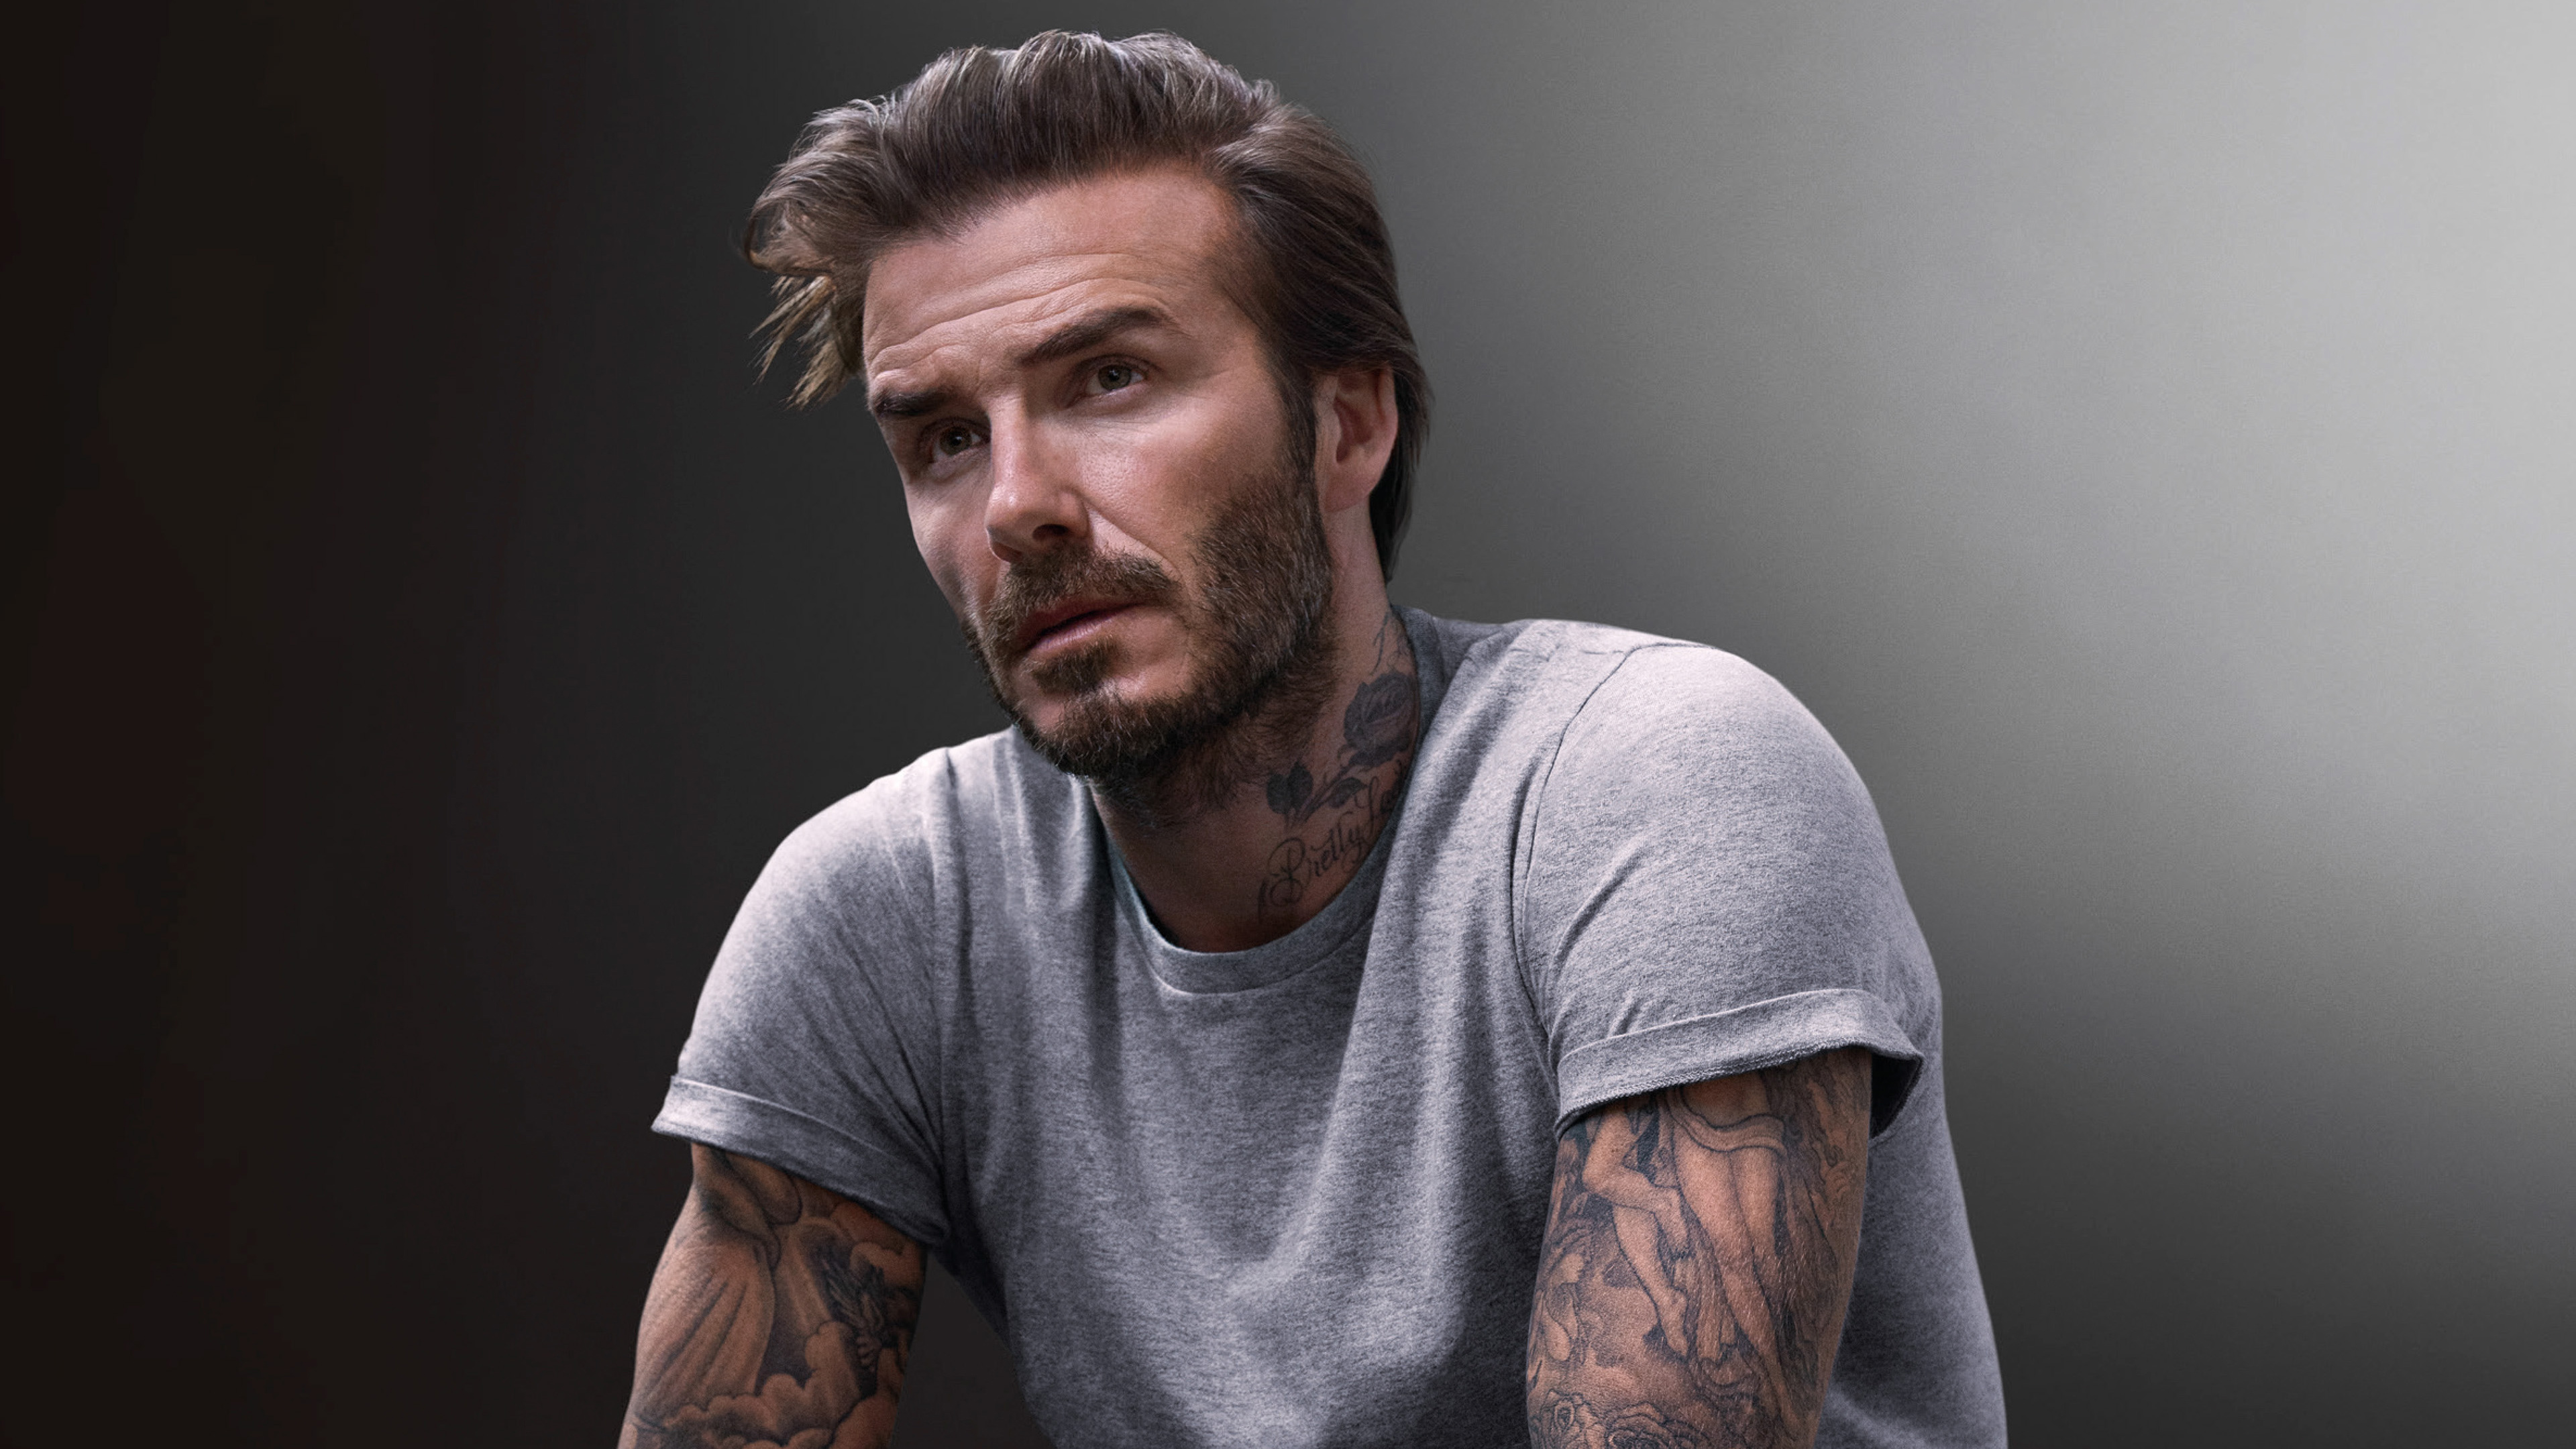 David Beckham 2018 4k, HD Sports, 4k Wallpapers, Images ...